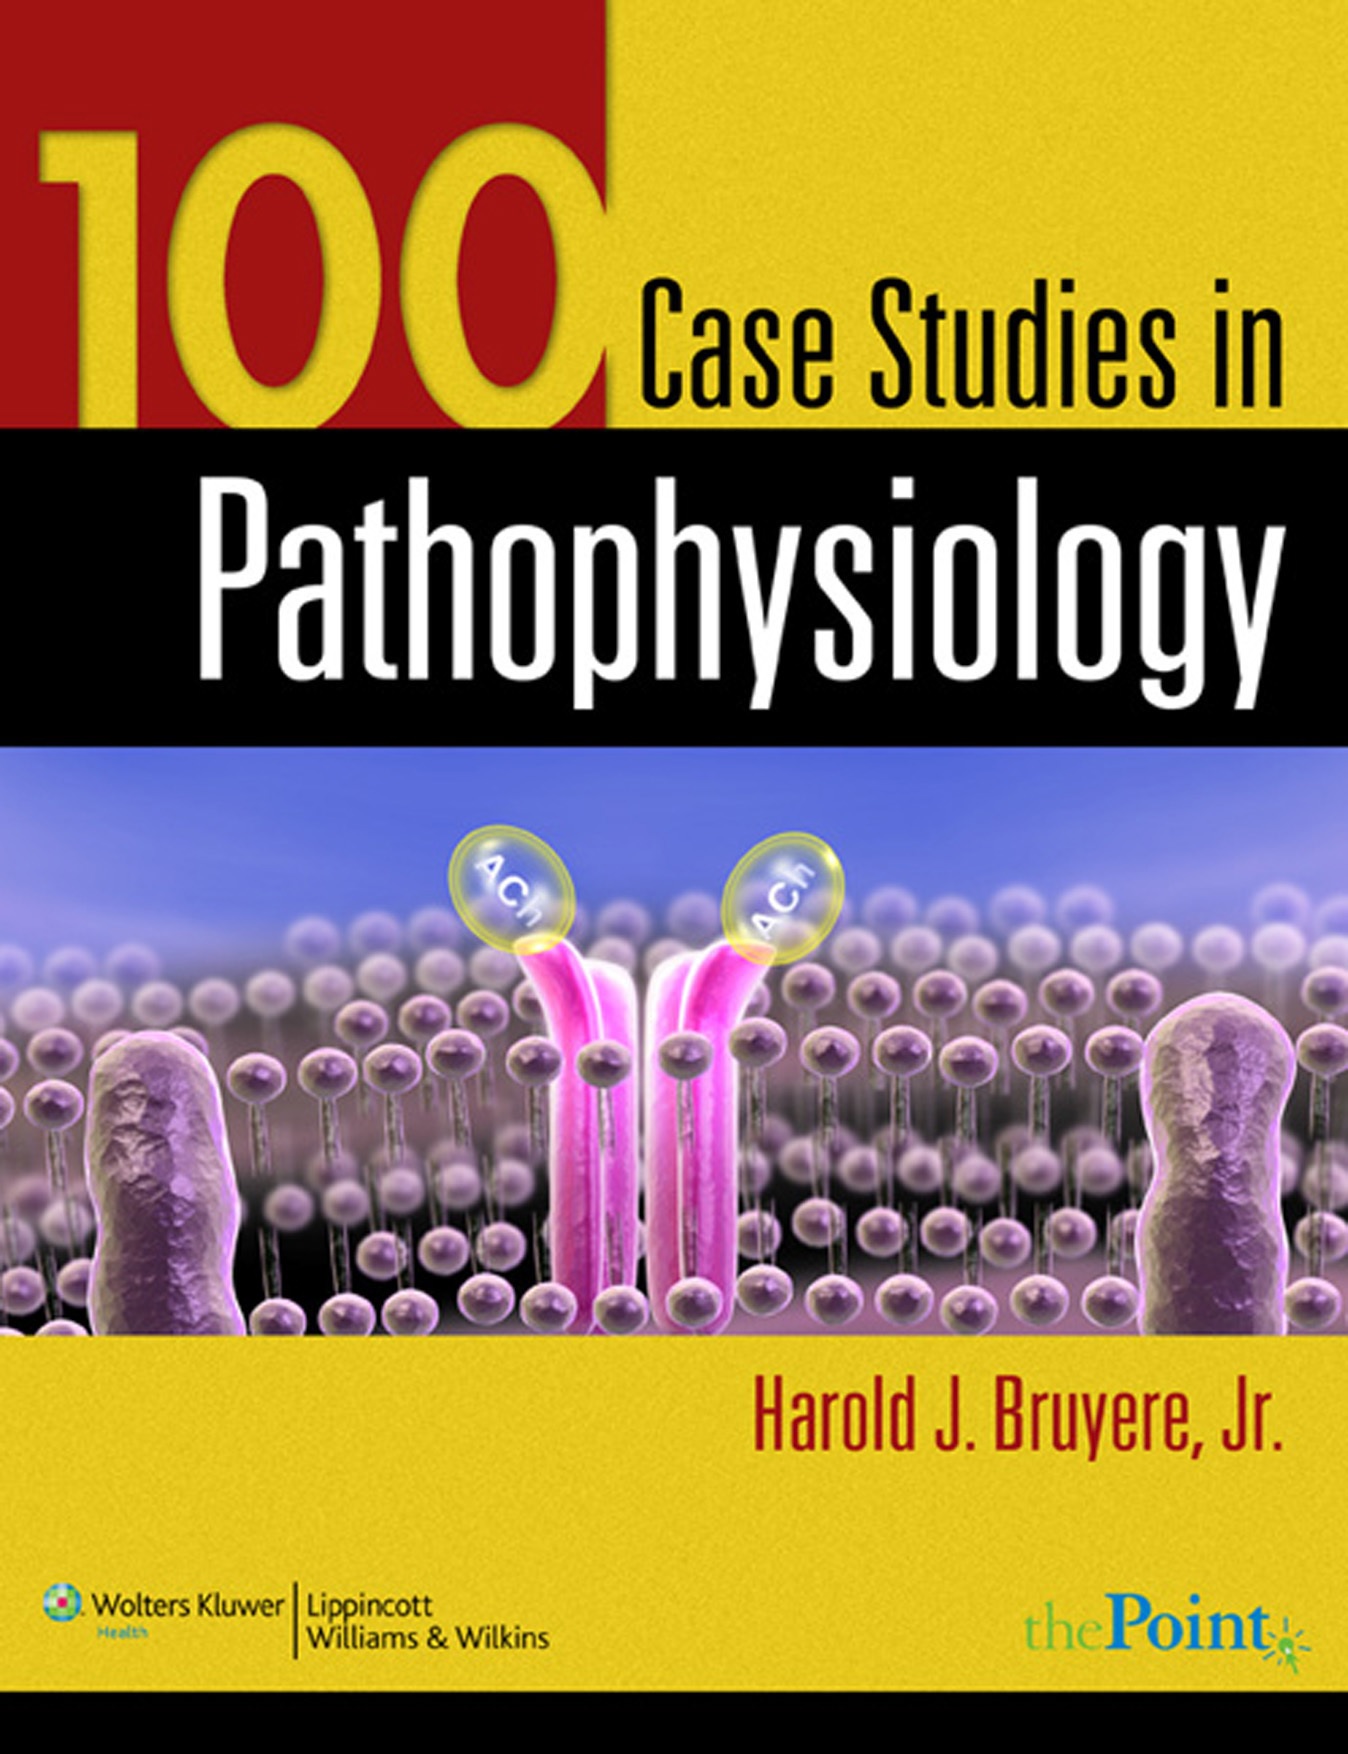 100 case studies in Pathophysiology pdf book free download